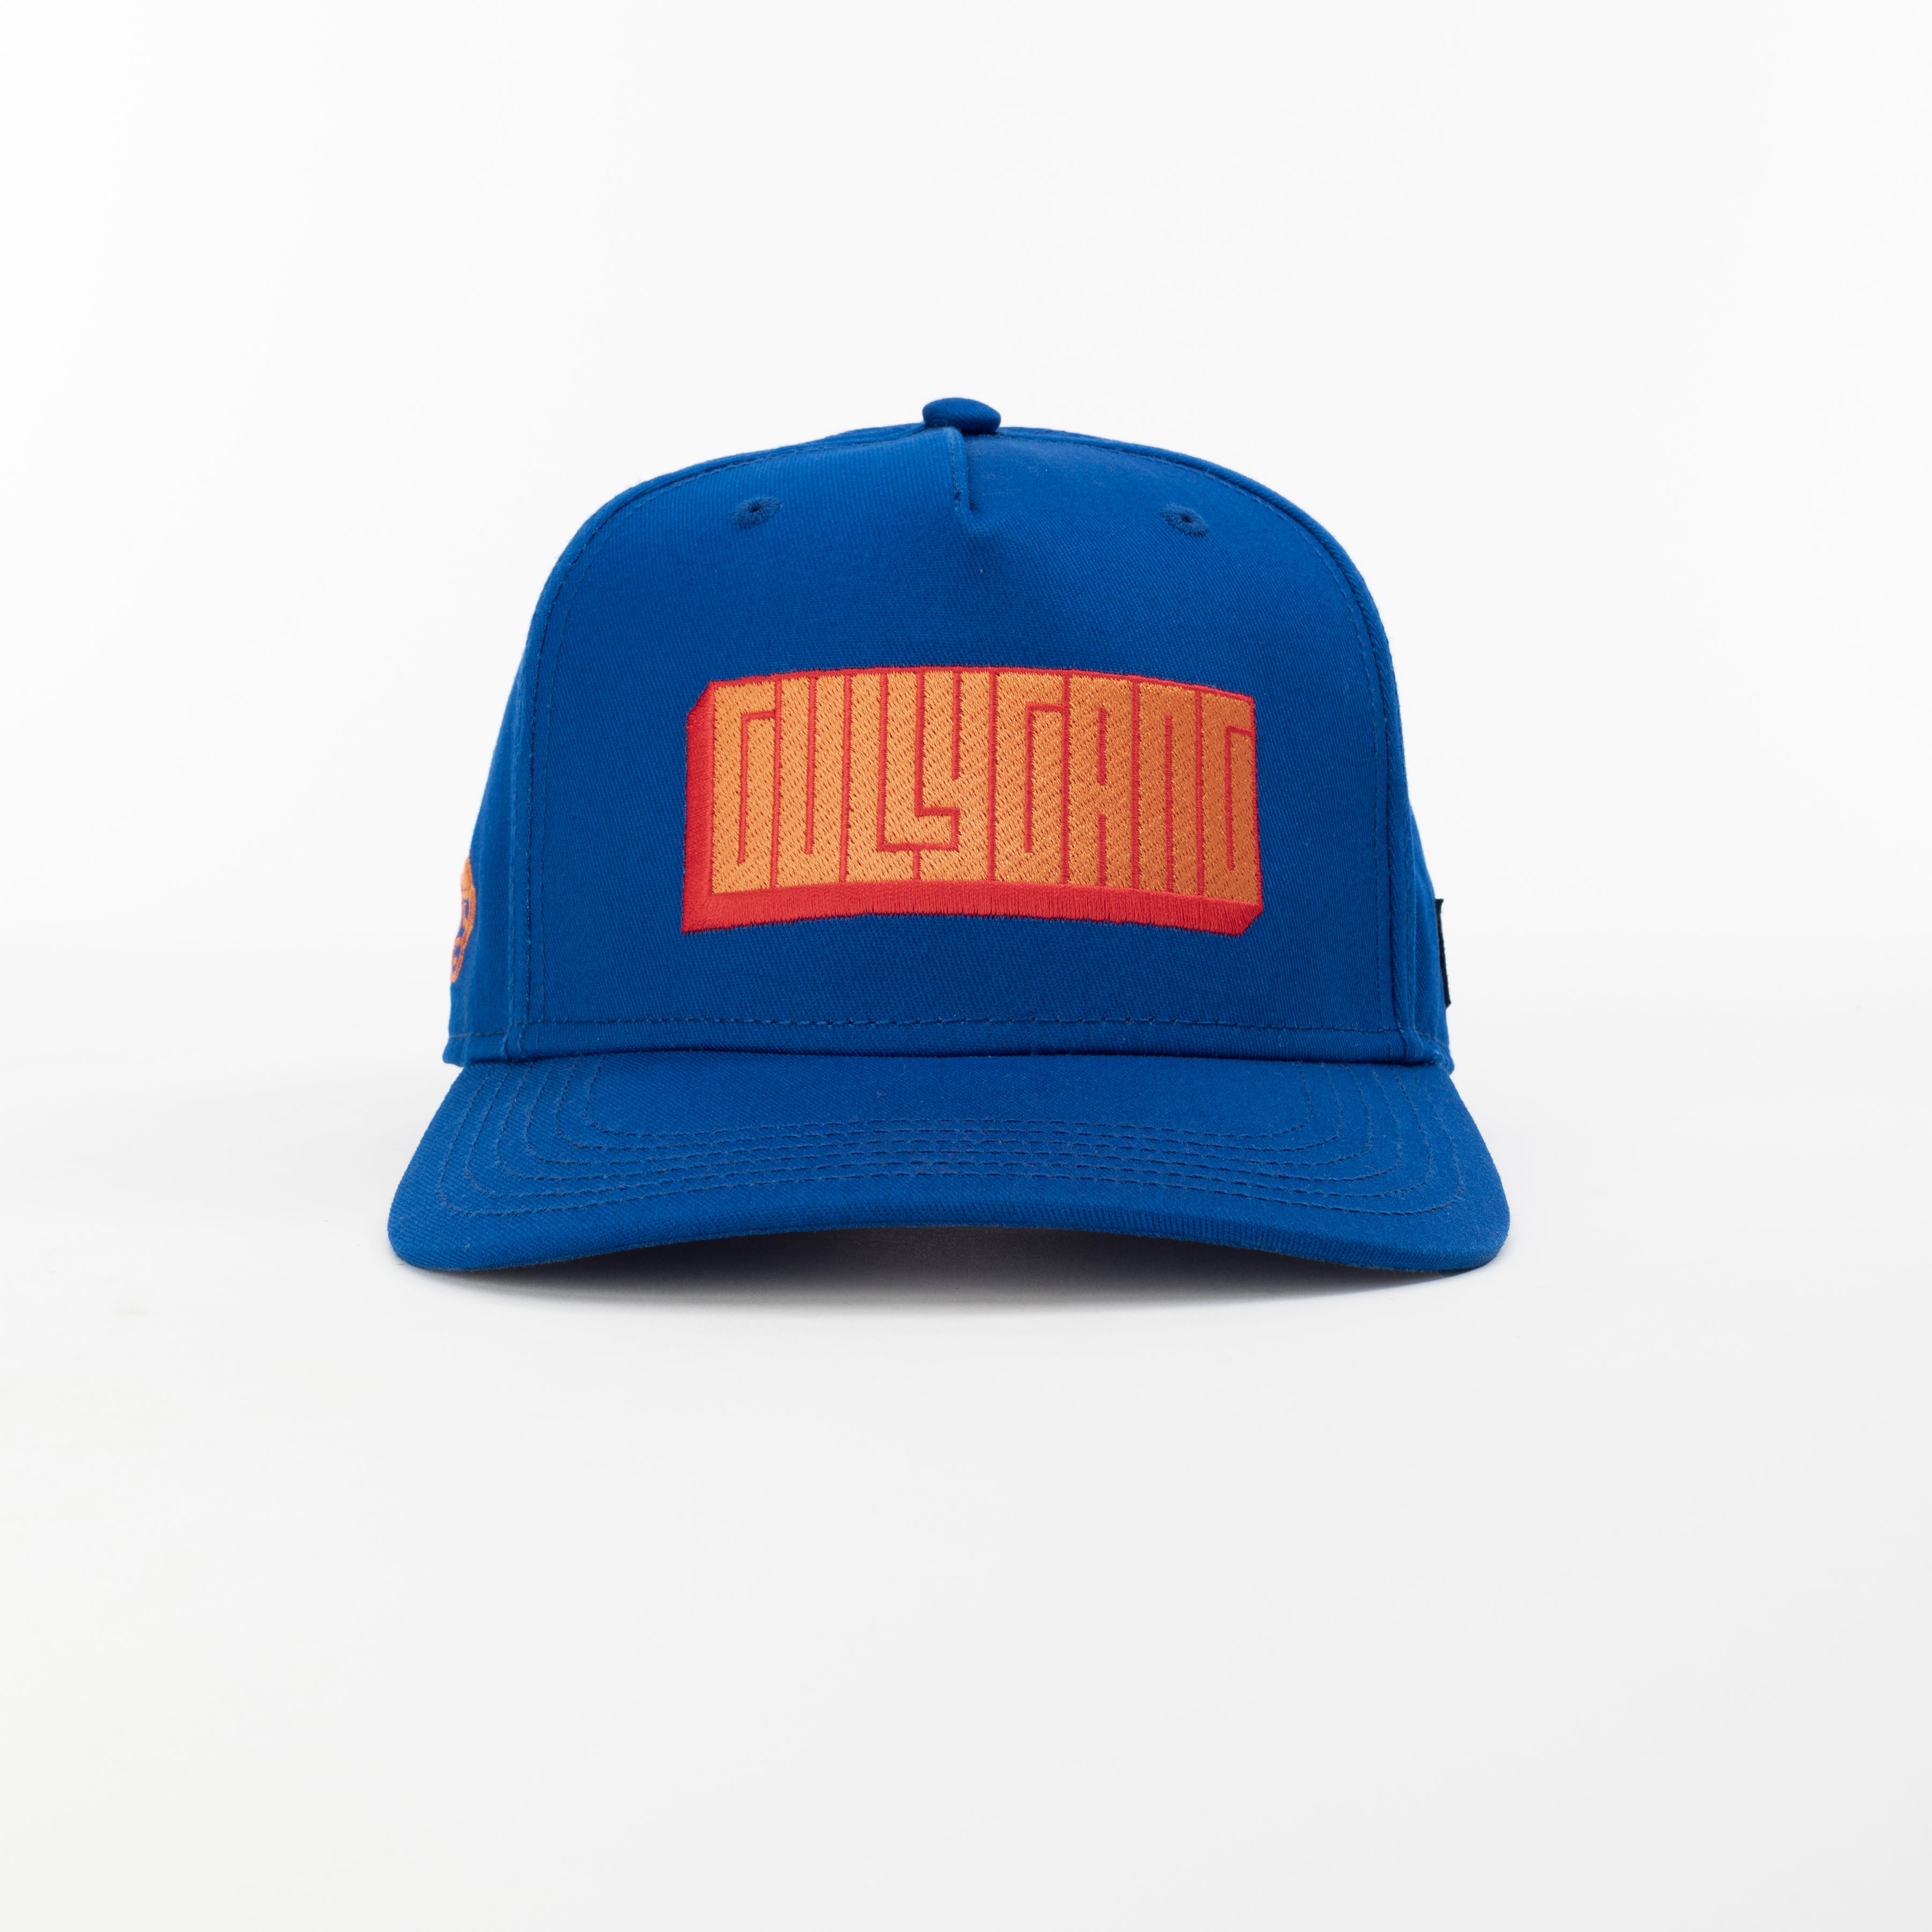 Urban Monkey Navy Blue Colour Rockstar Caps 9221 – Luxury D'Allure